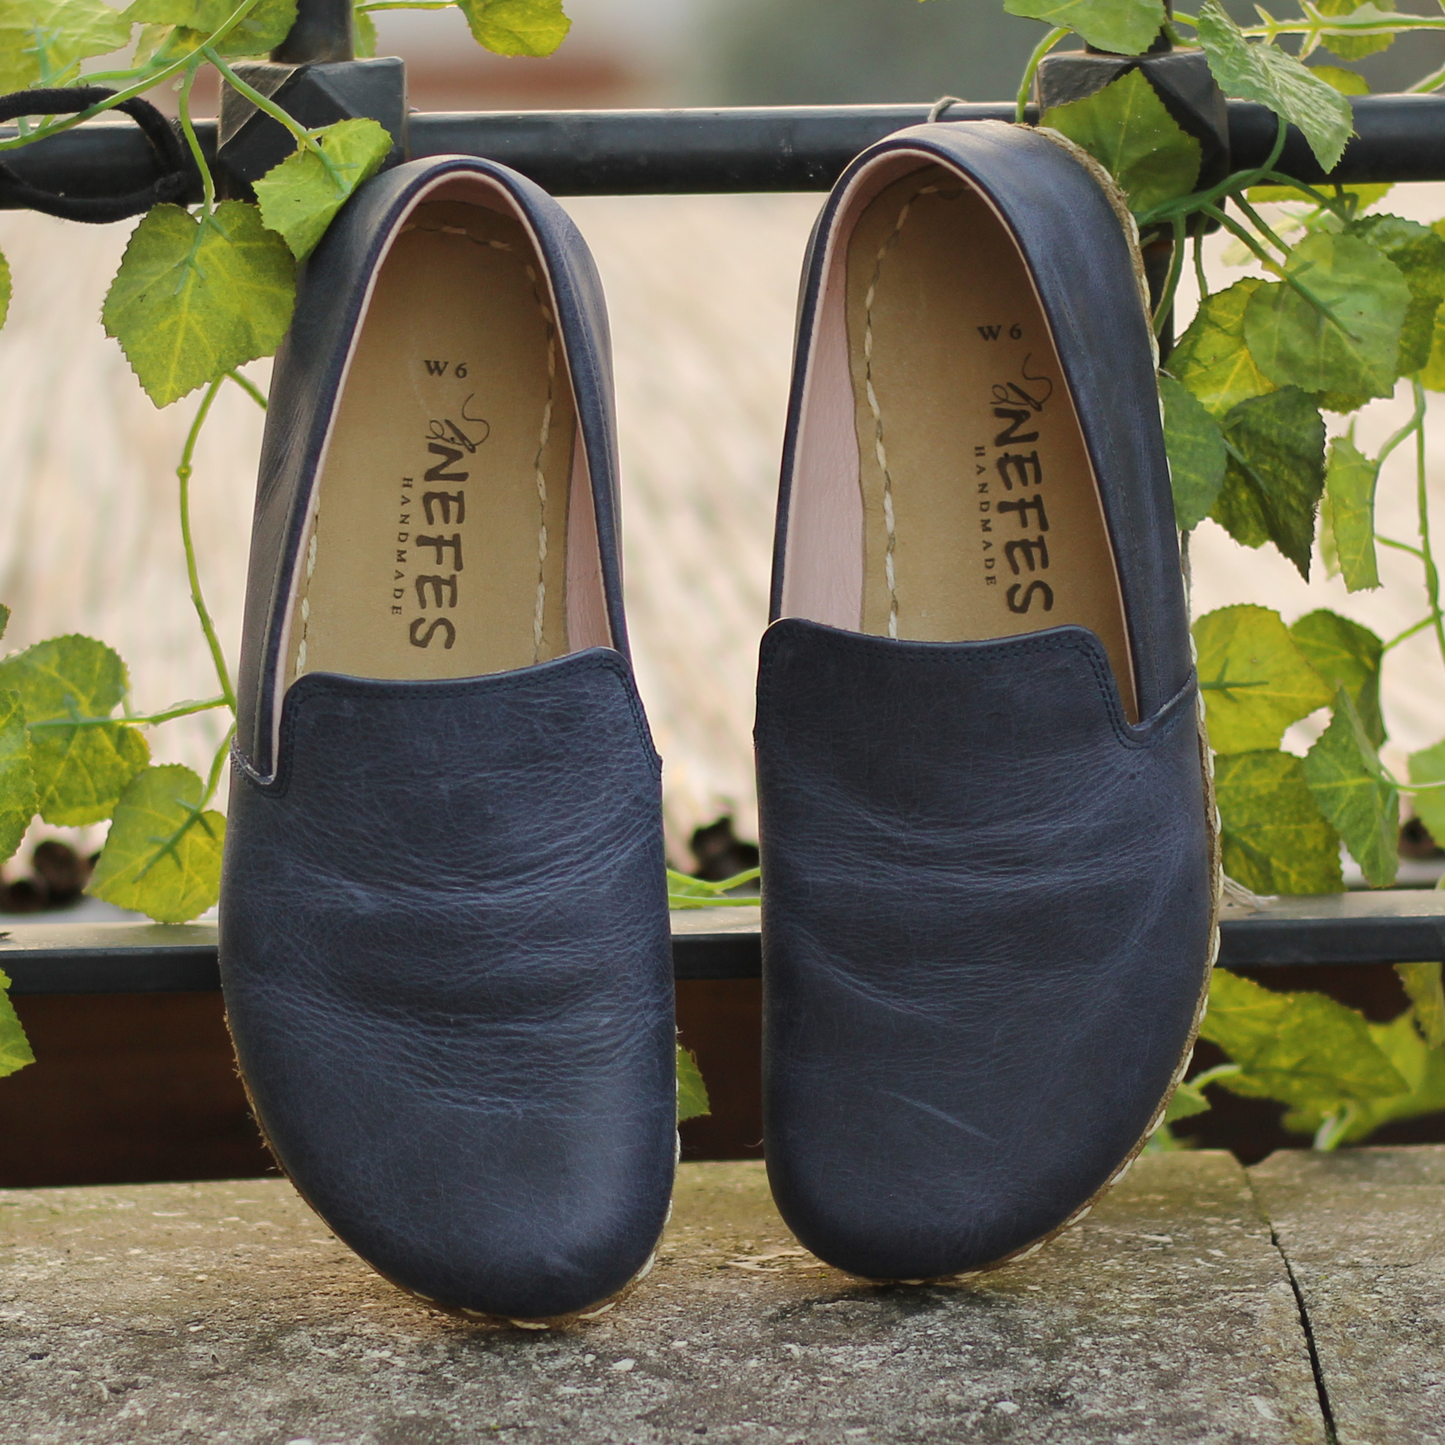 Modern Crazy Navy Blue: Barefoot Leather Elegance for Women